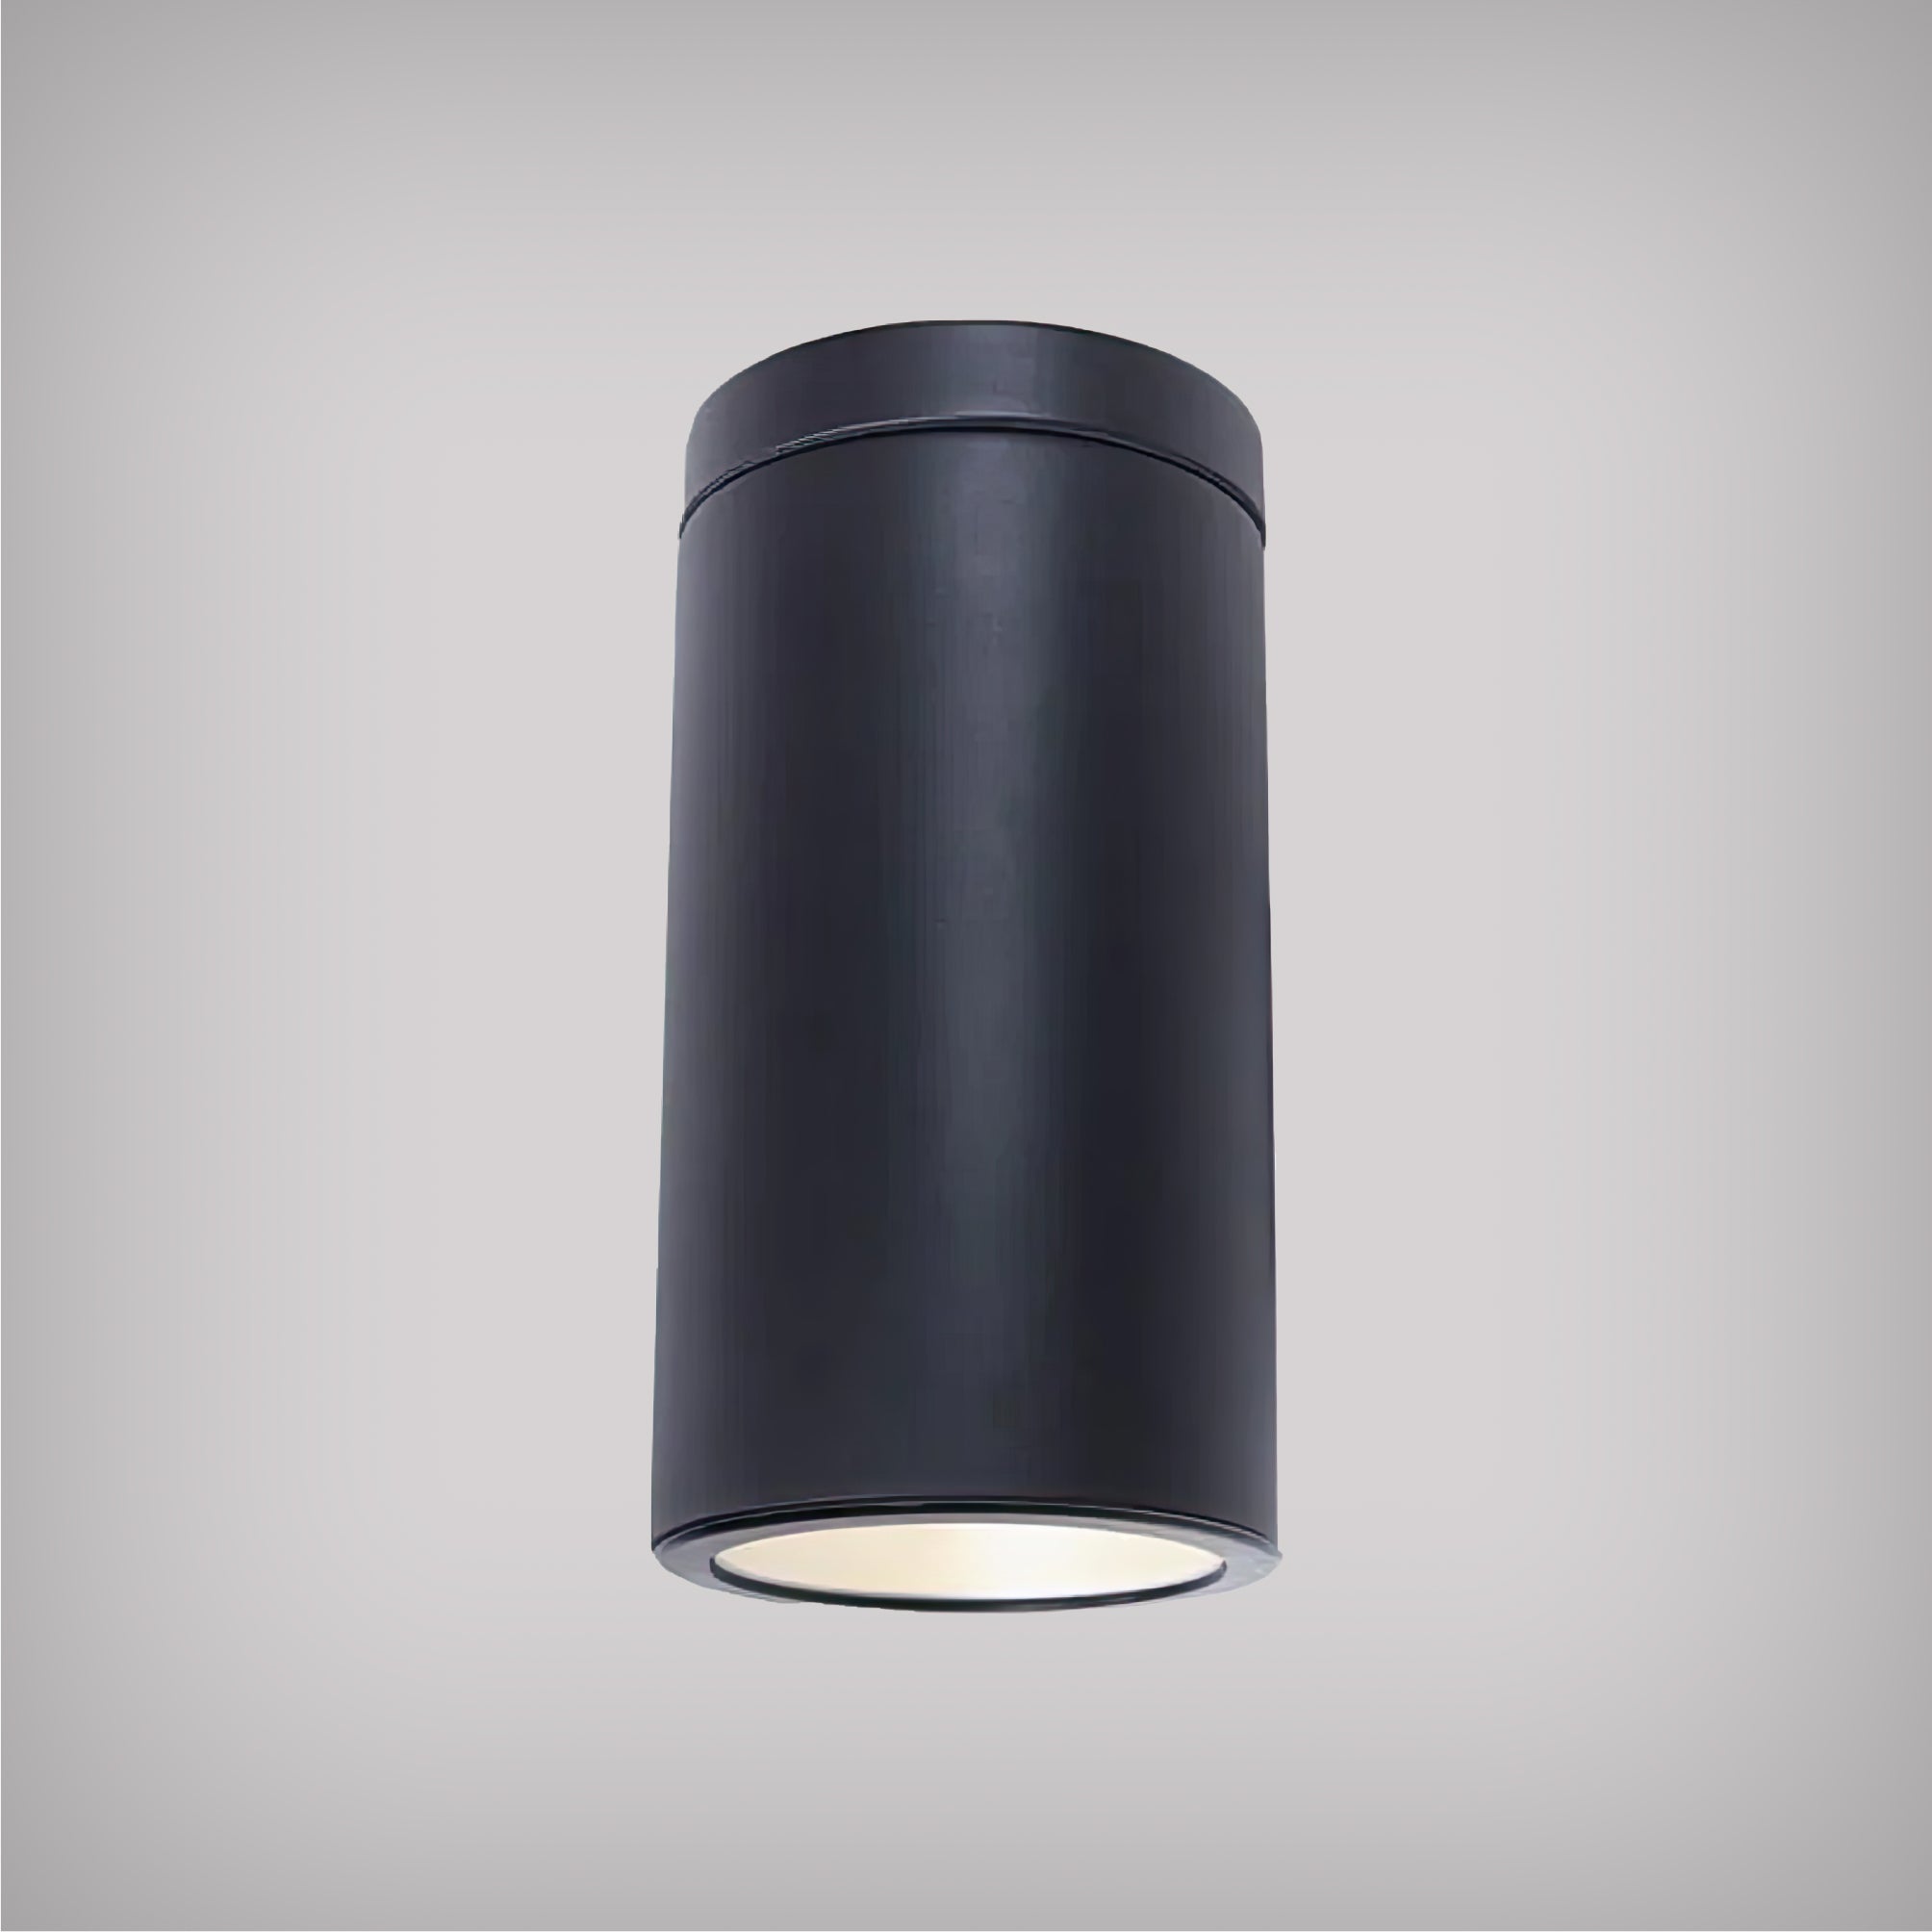 Stunt Architectural LED 6 Inch Ceramic Cylinder Surface Mount Light